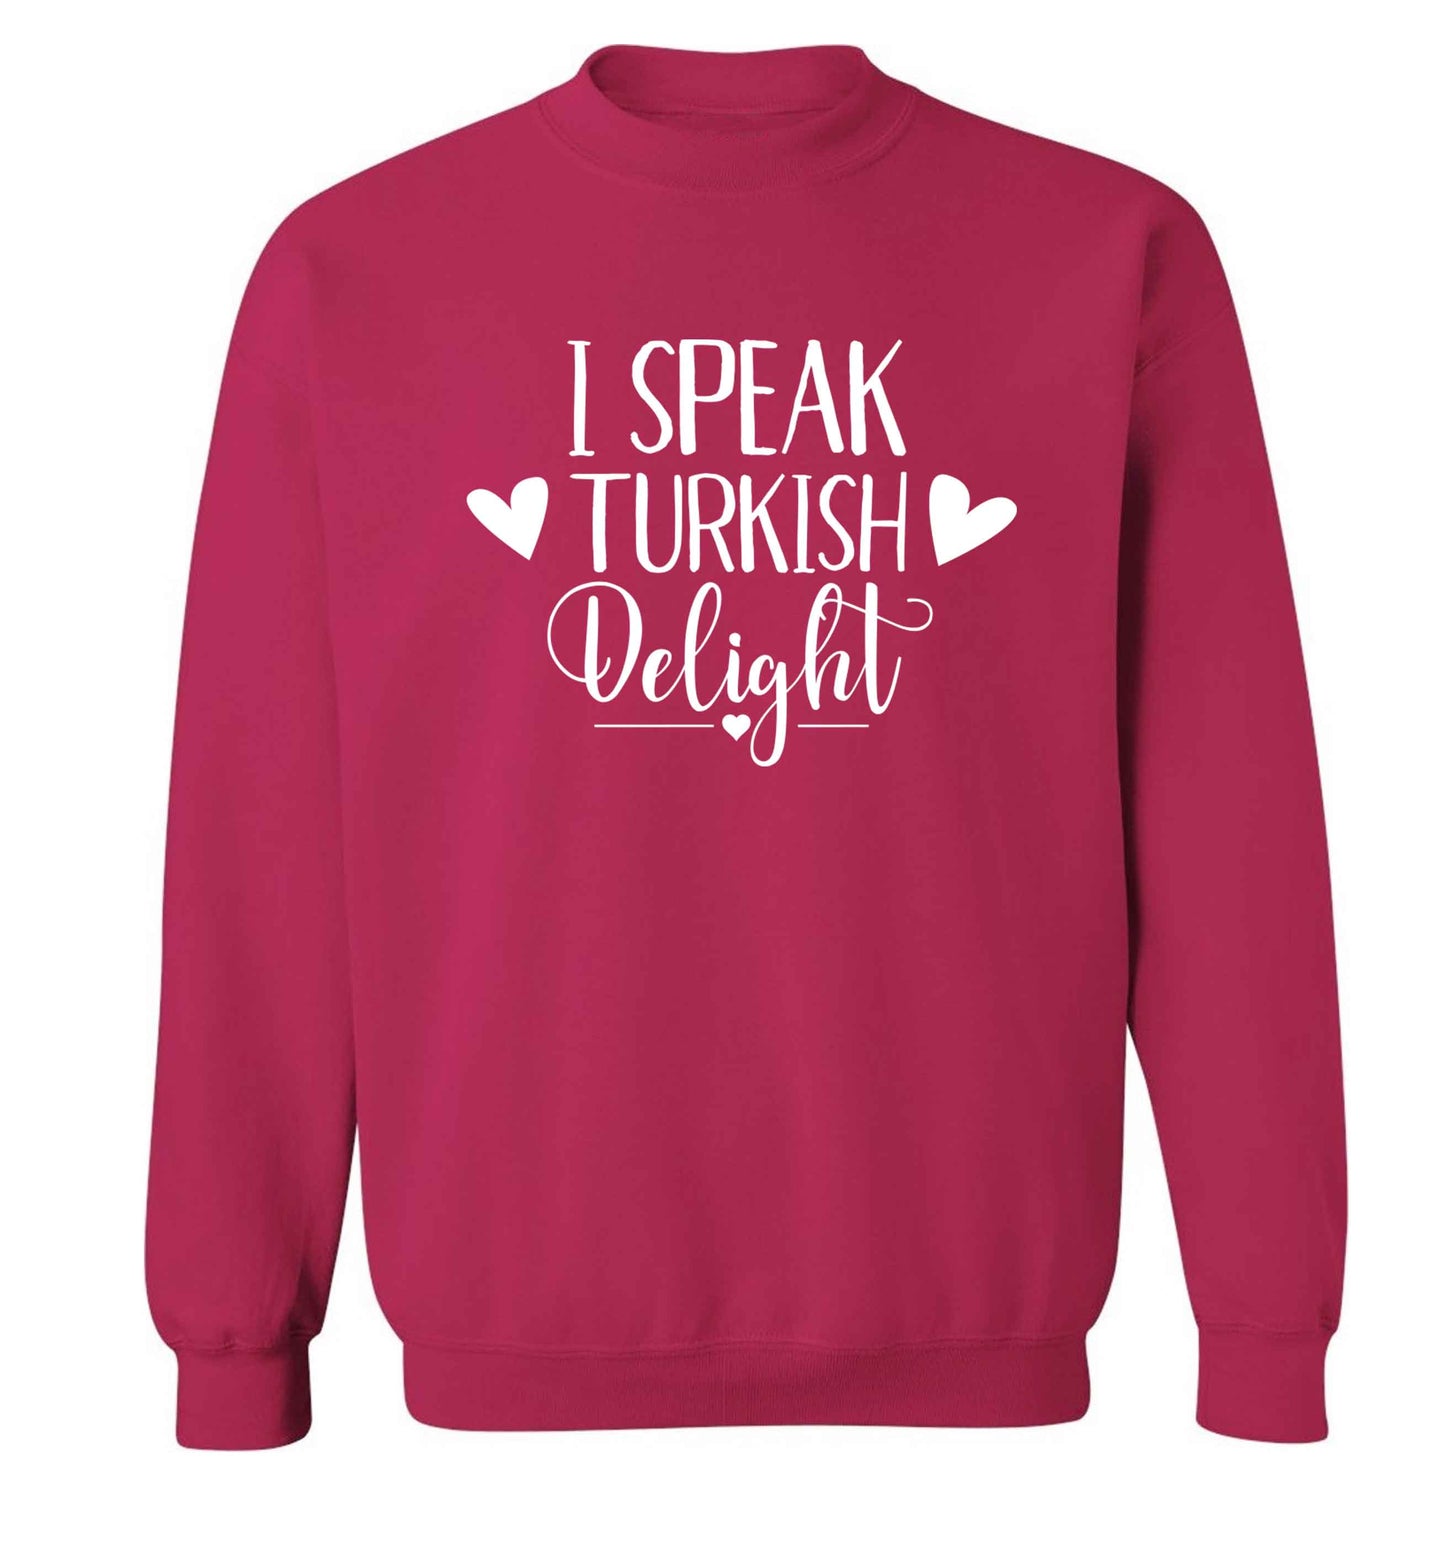 I speak turkish...delight Adult's unisex pink Sweater 2XL